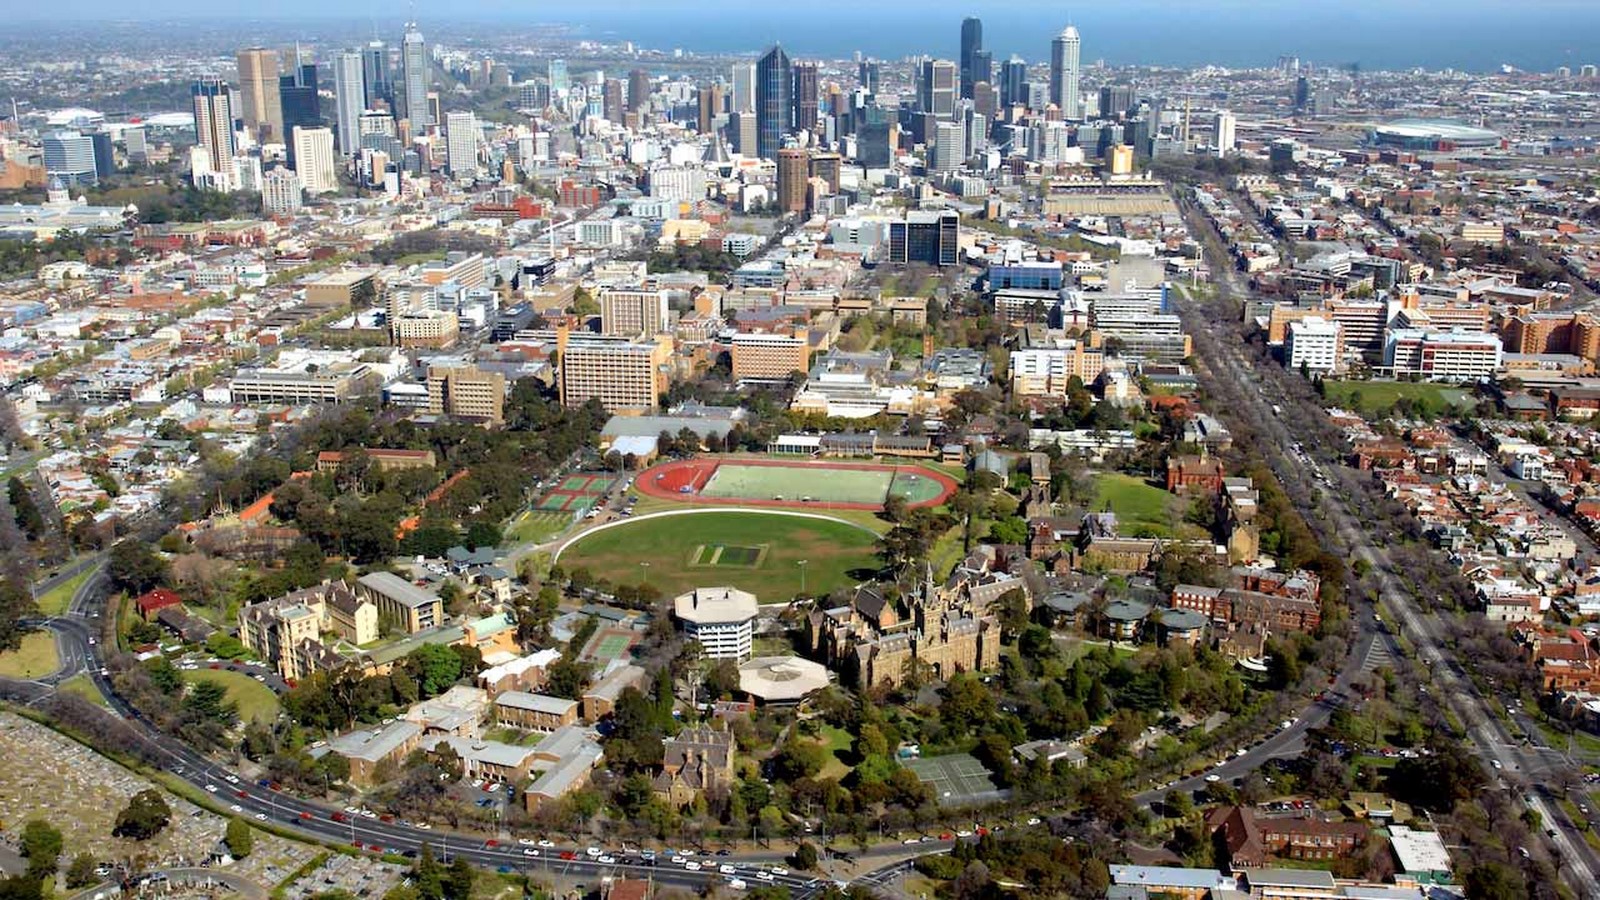 Campus life at University of University of Melbourne - Sheet1